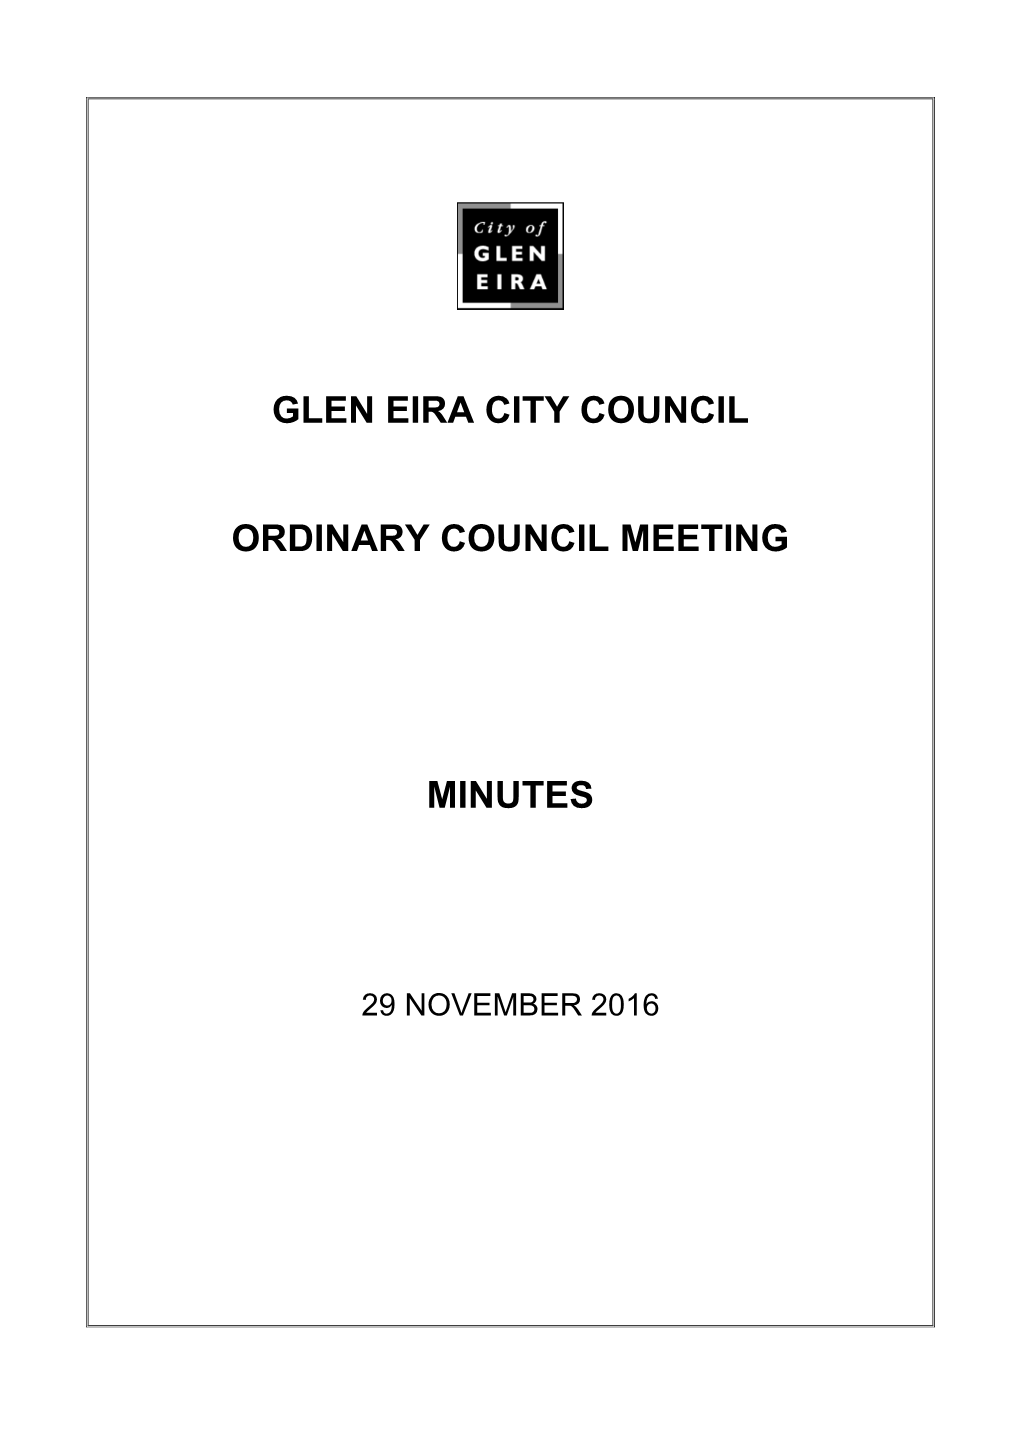 Council Meeting Minutes — 29 November 2016